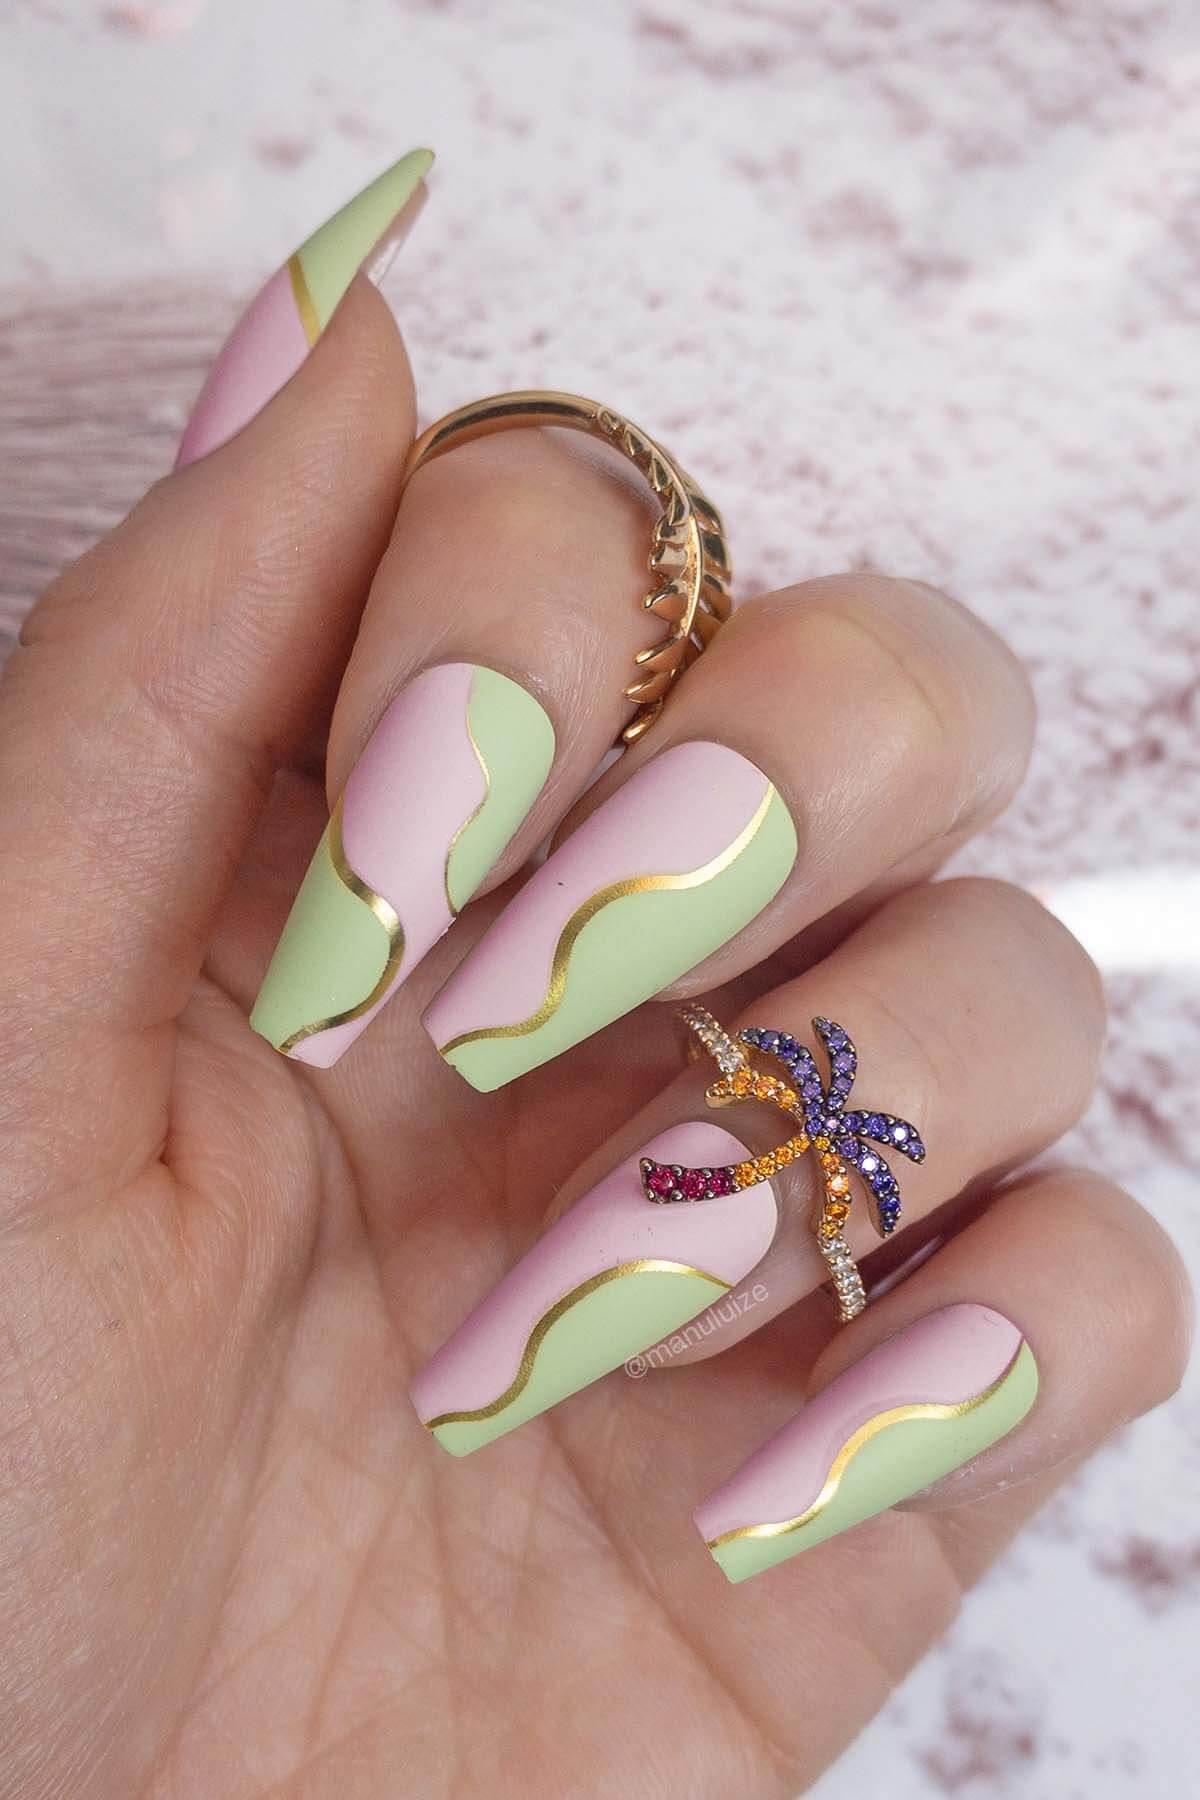 Pastel pink and green nails